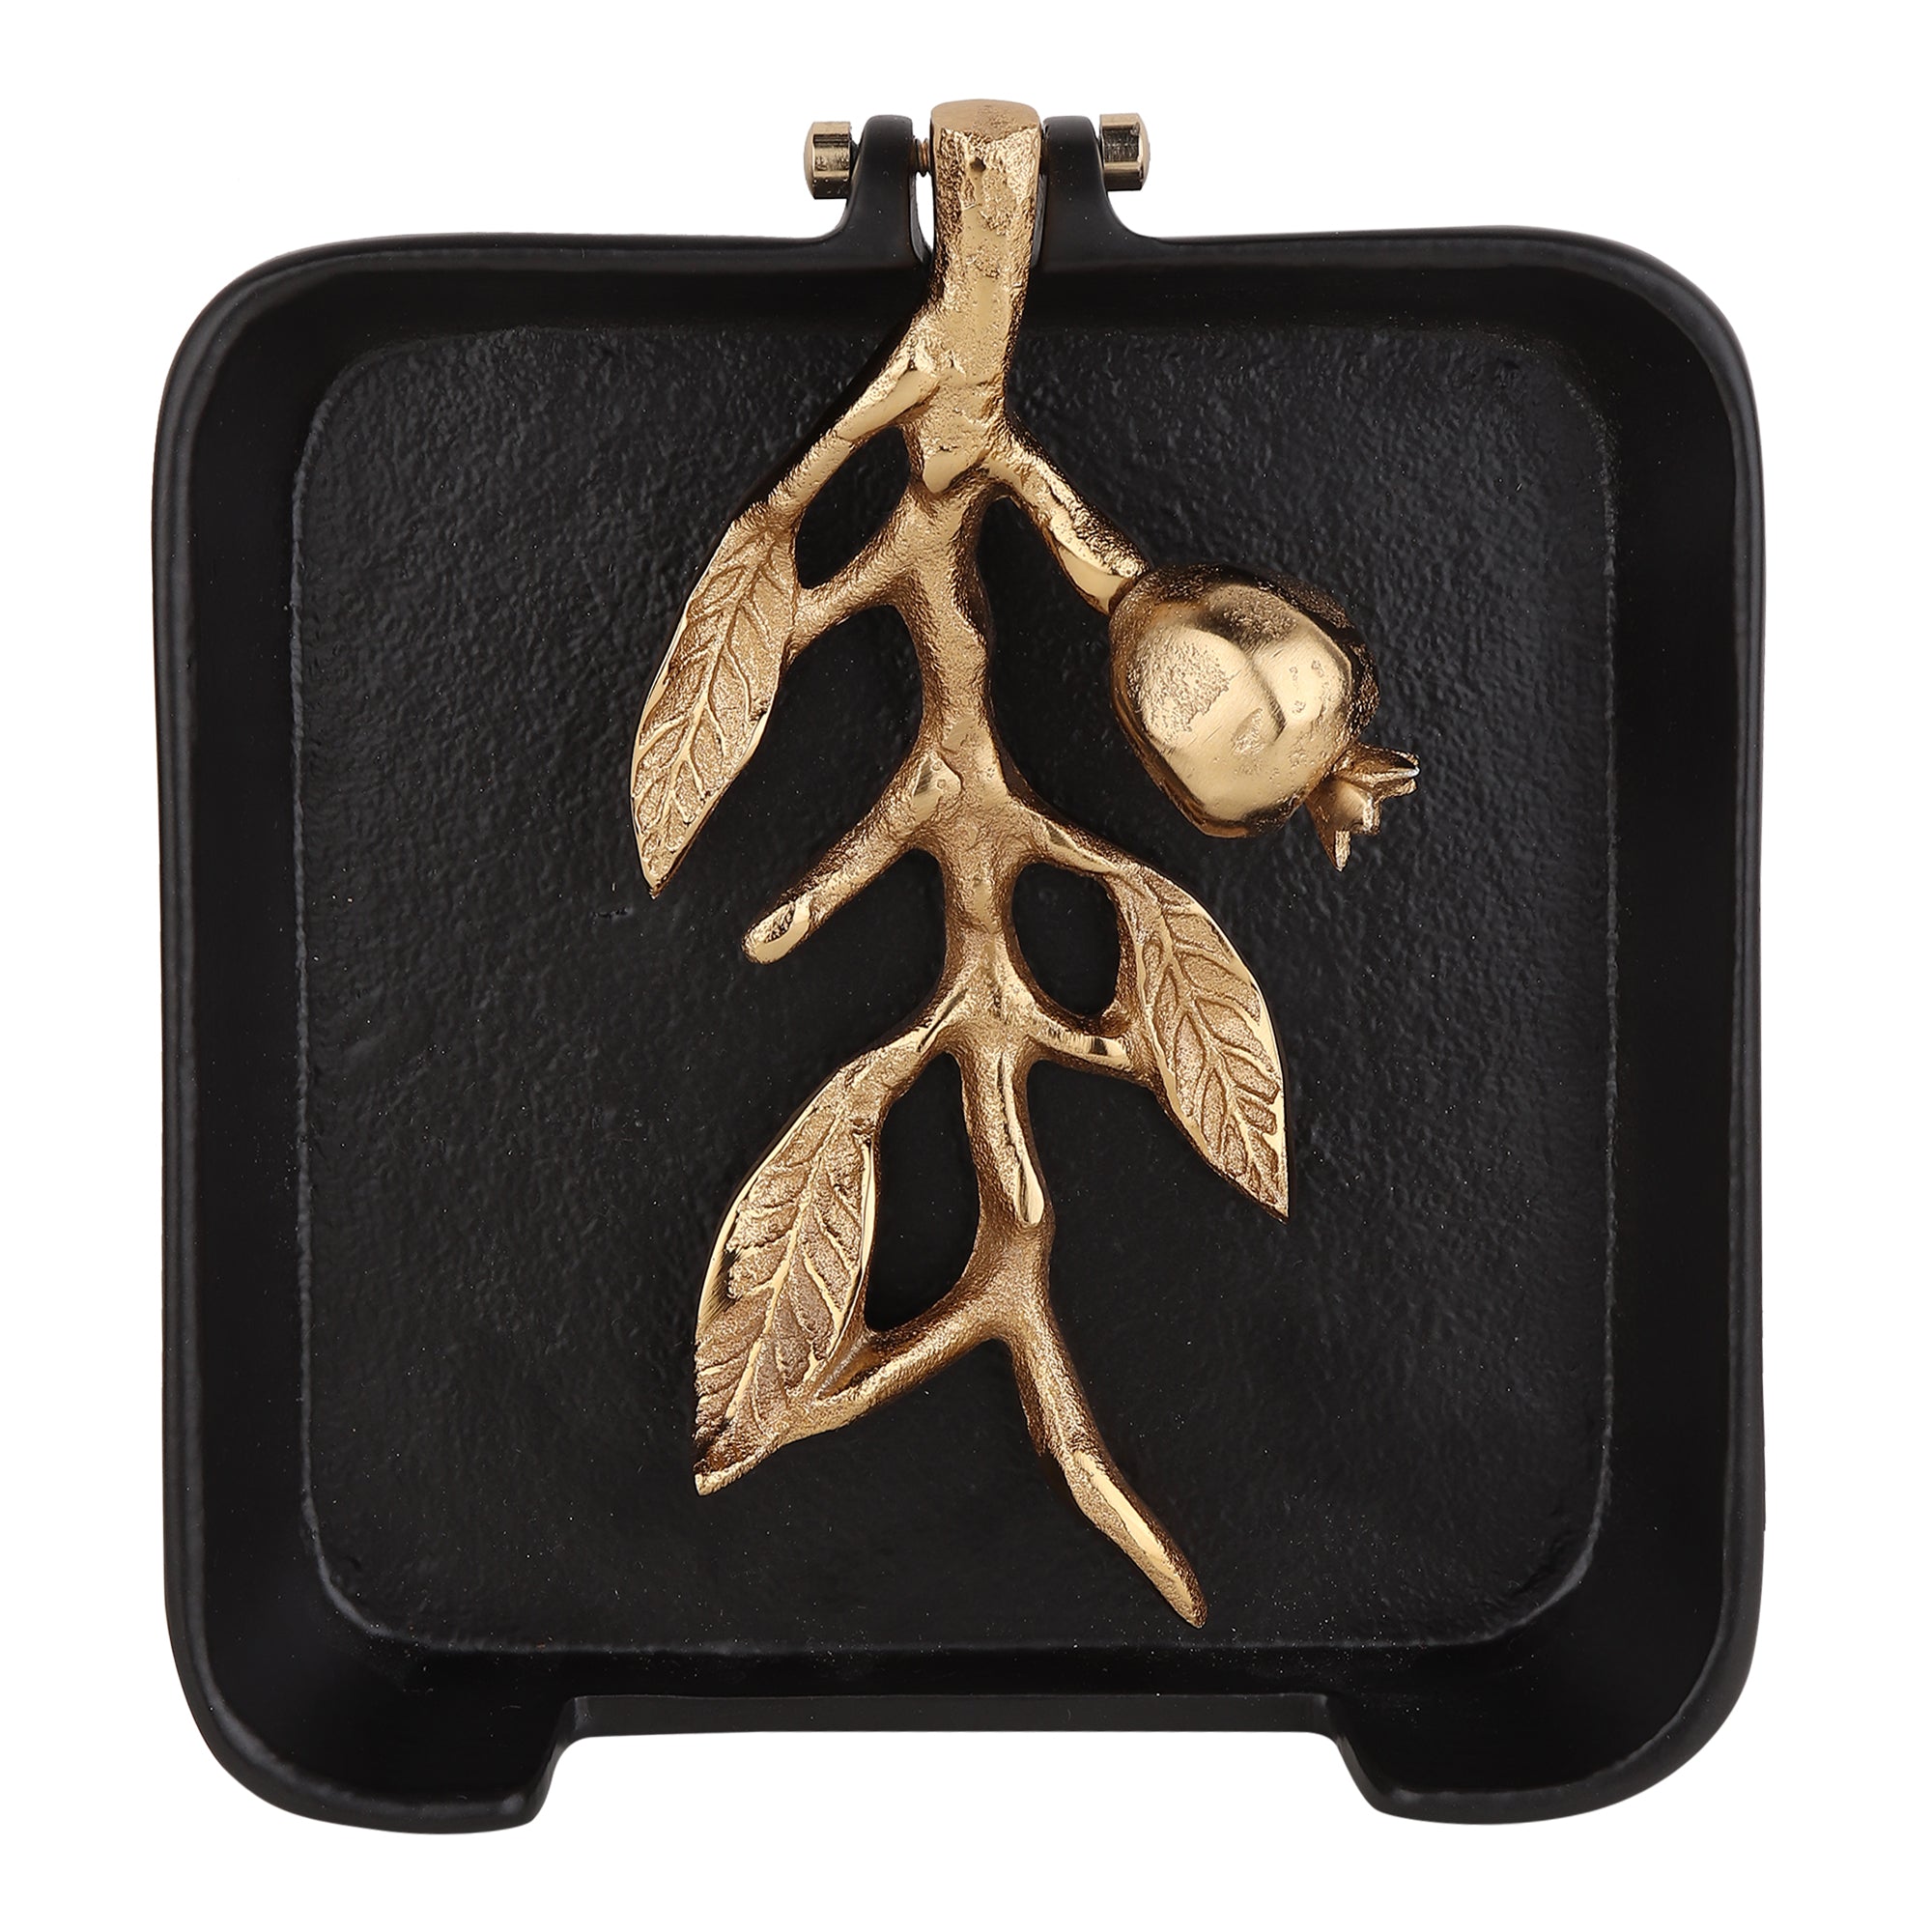 Leafy tissue holder in Black Gold